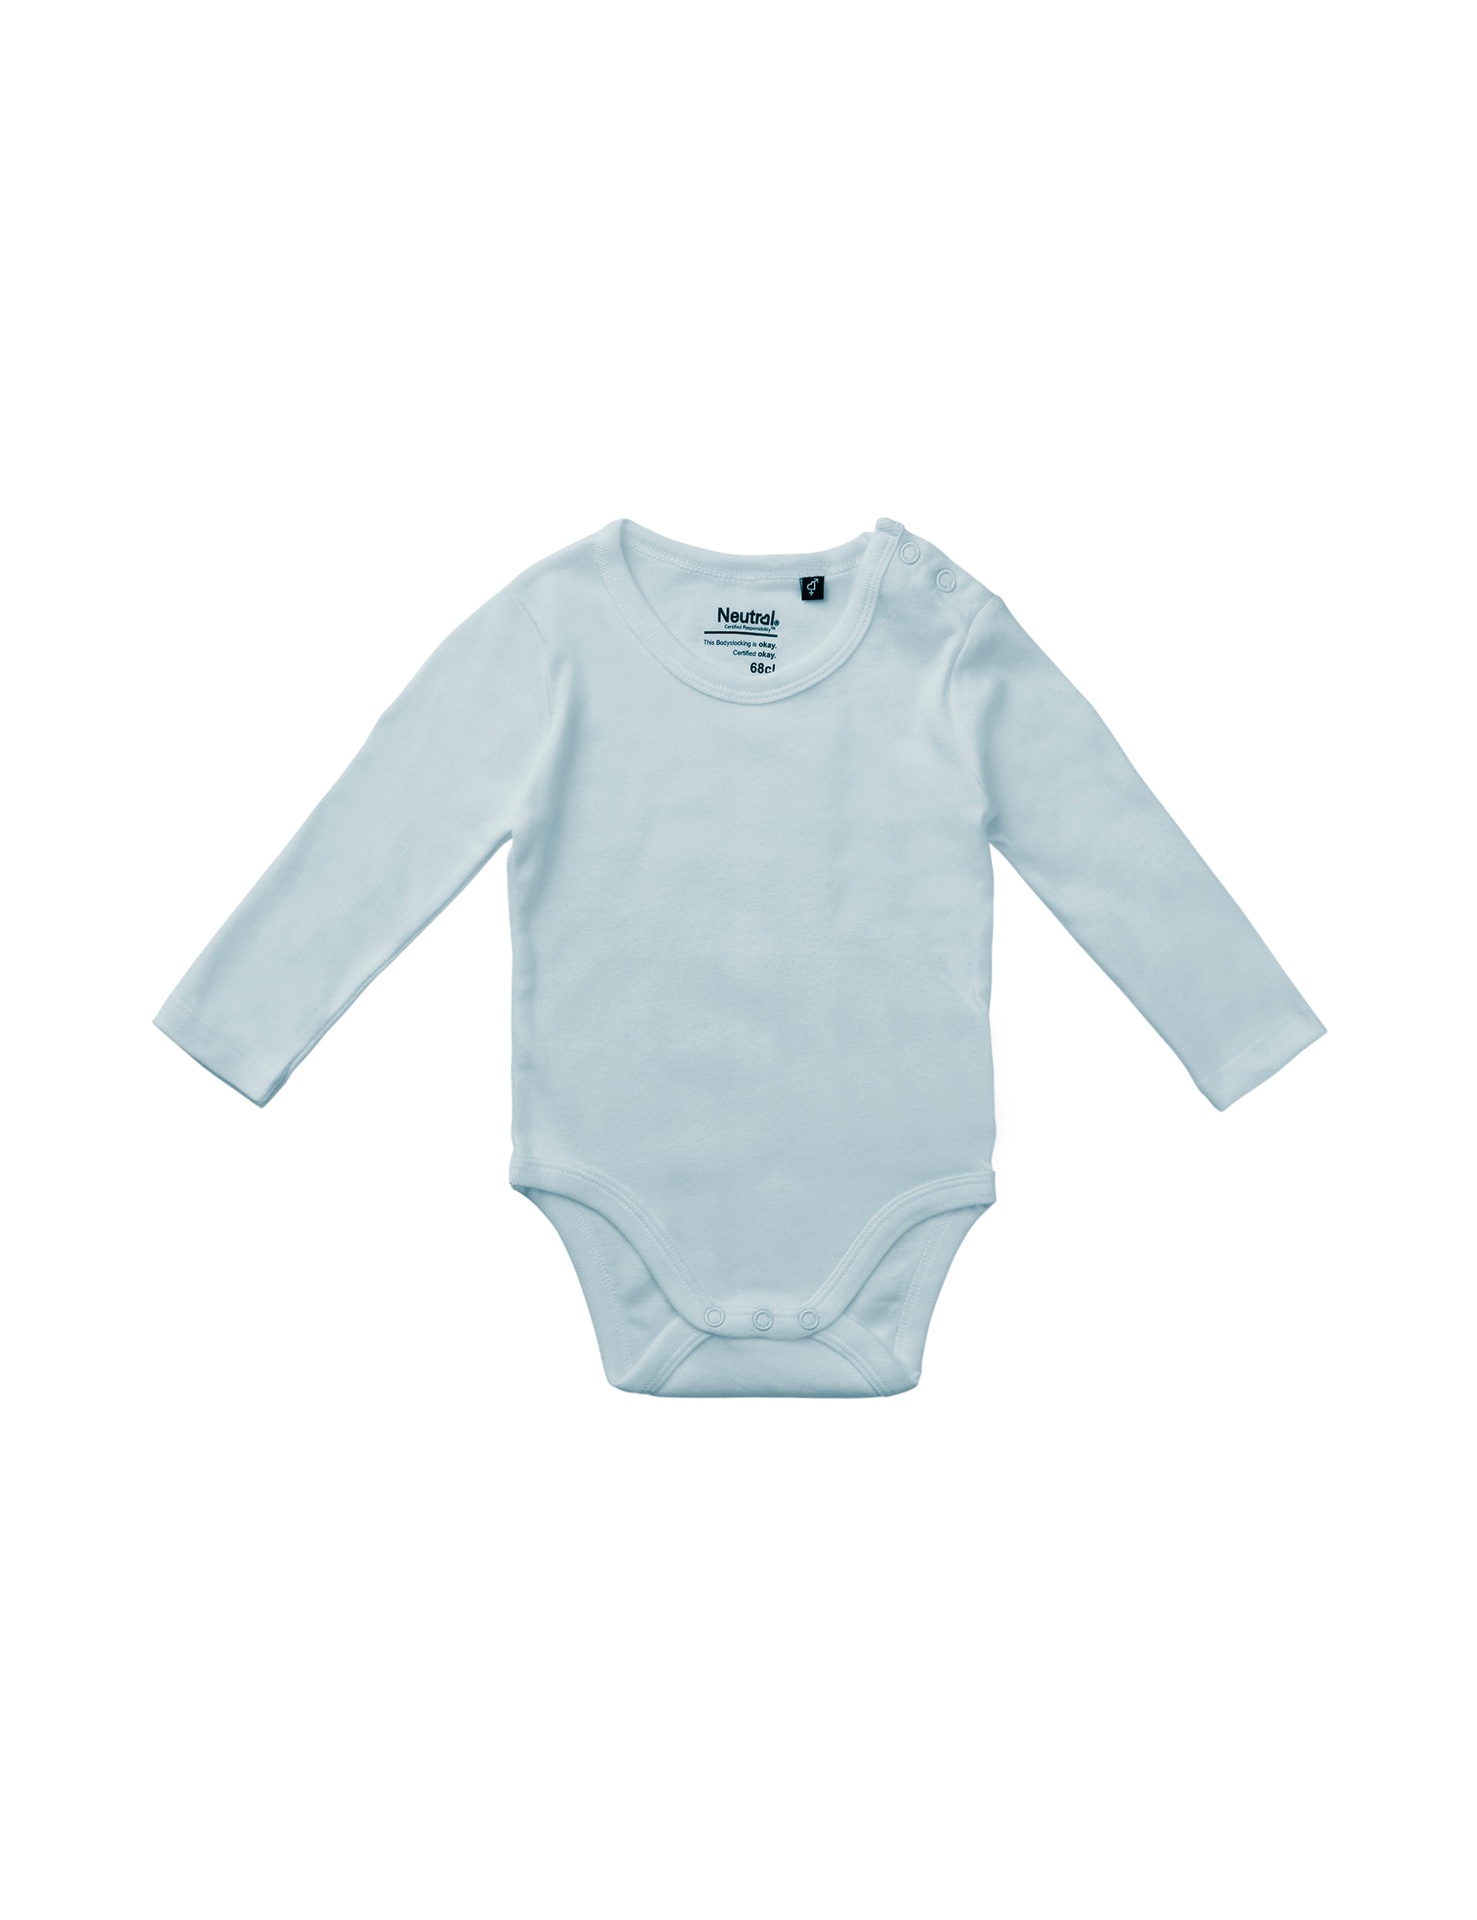 [PR/05759] Babies Long Sleeve Bodystocking (Light Blue 69, 86 cm)